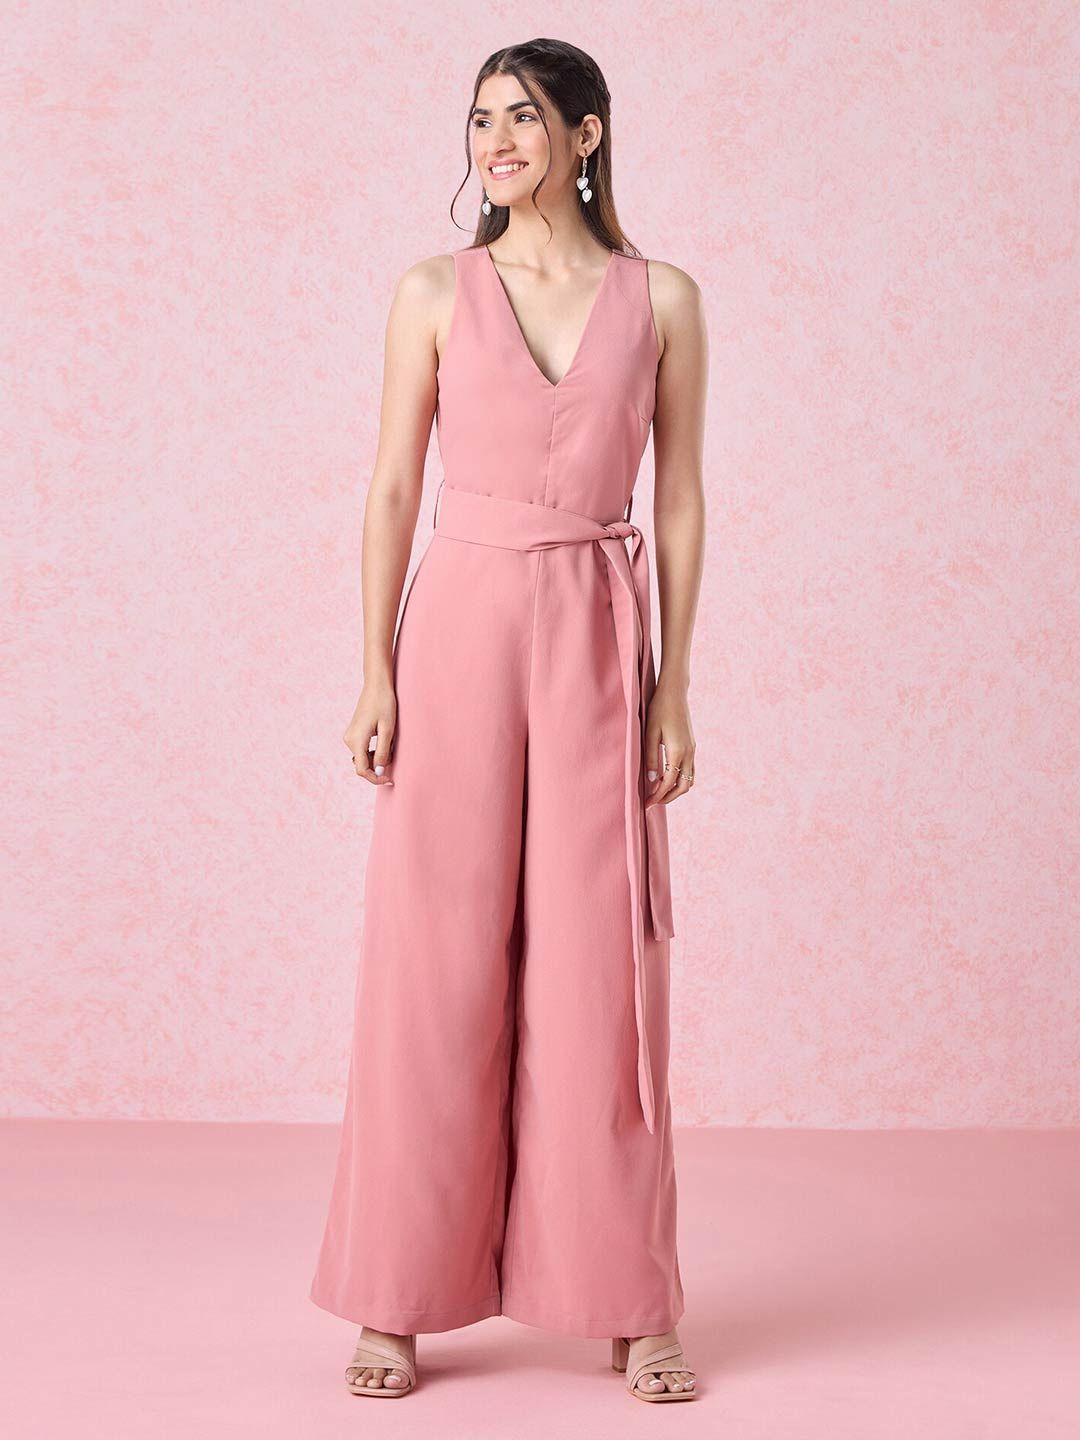 20dresses pink v-neck sleeveless basic jumpsuit